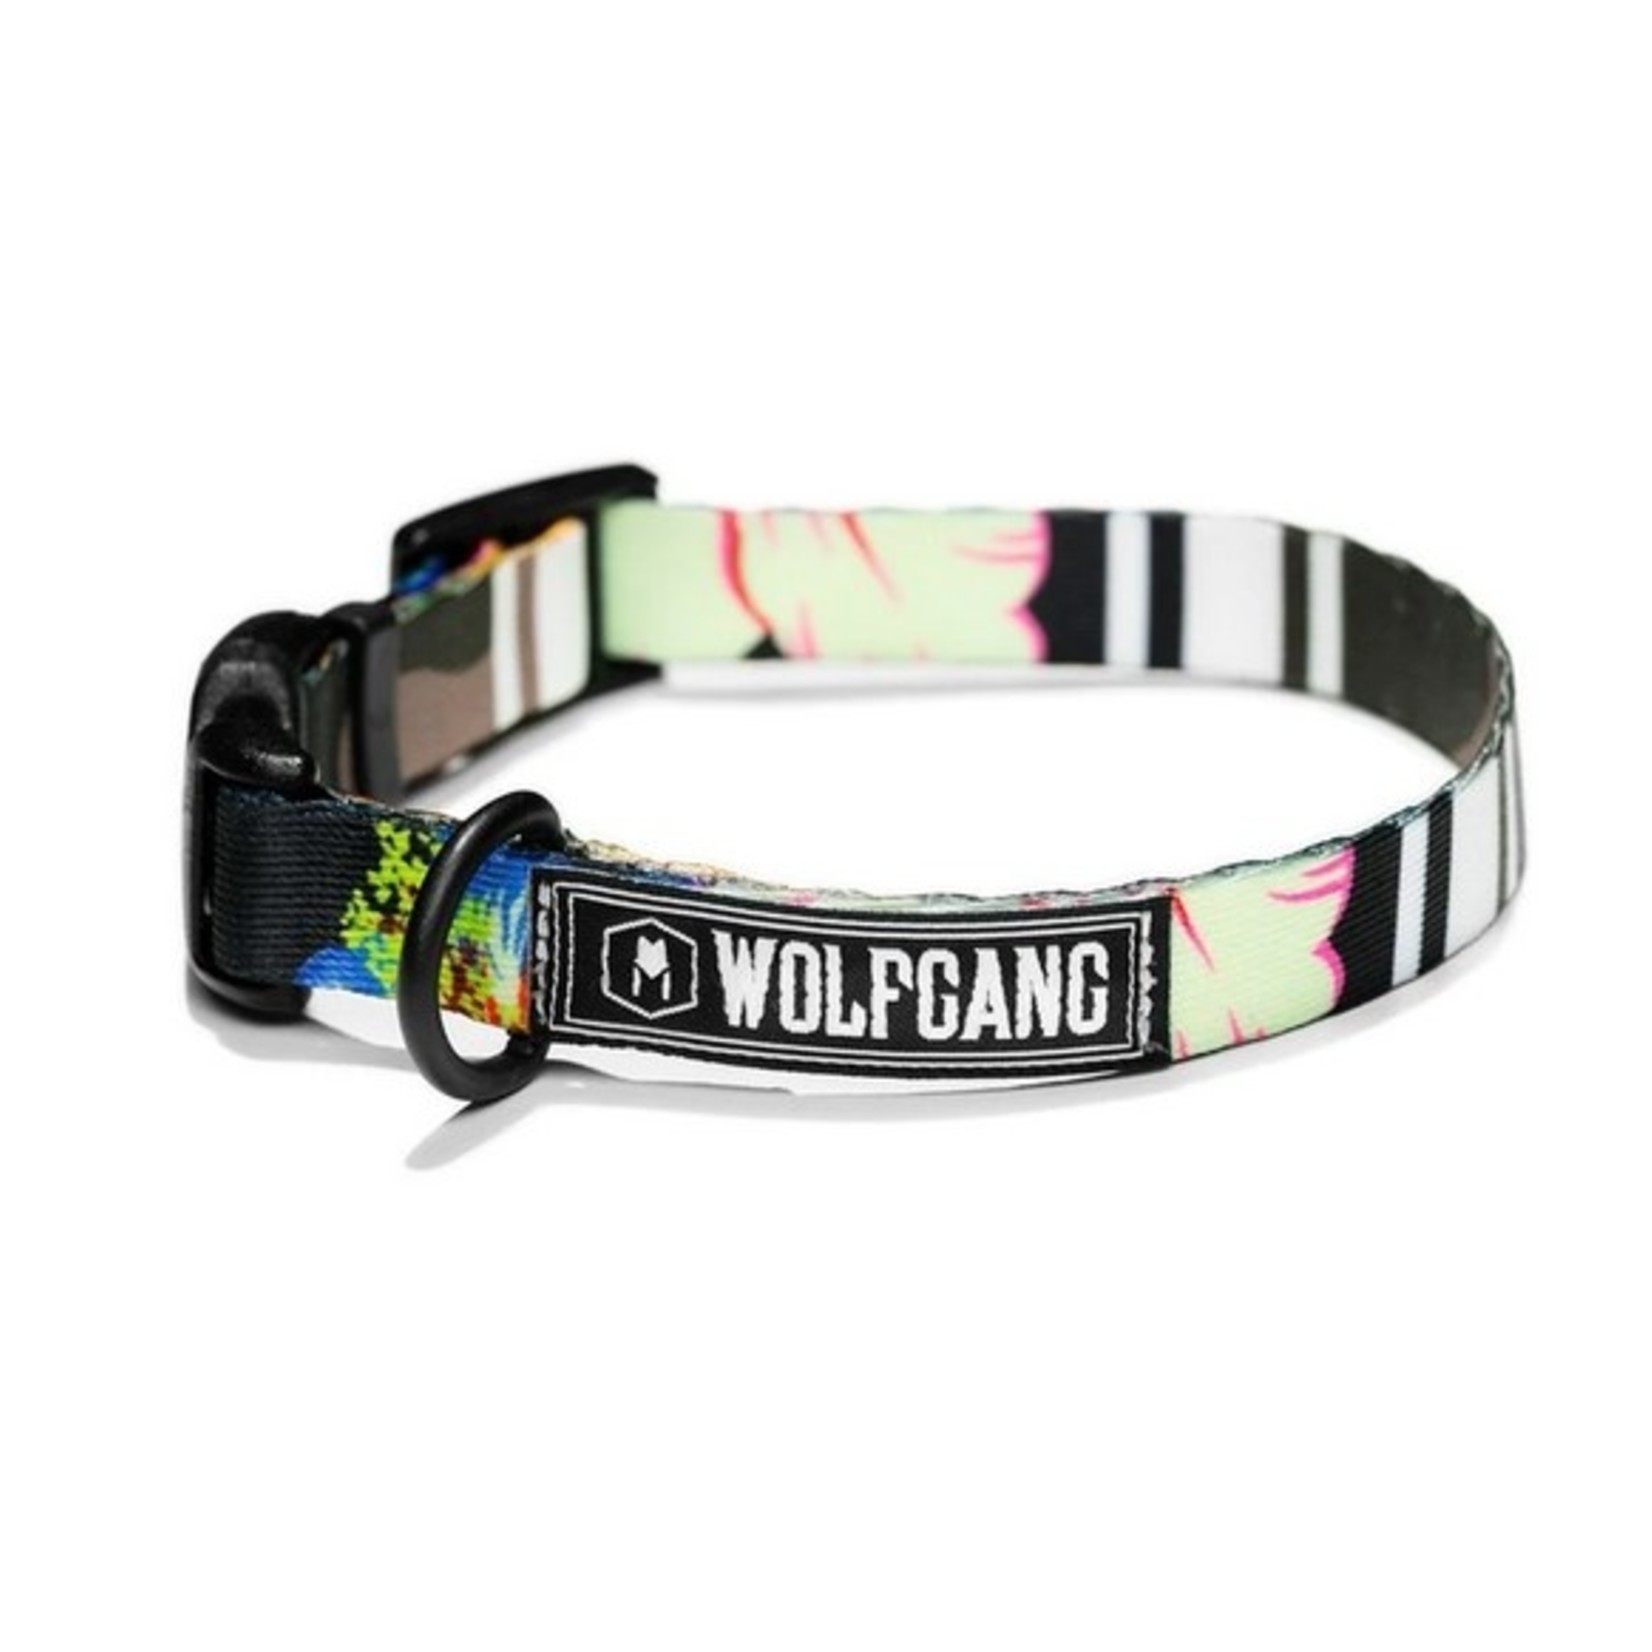 WOLFGANG StreetLogic Dog Collar **discontinued**